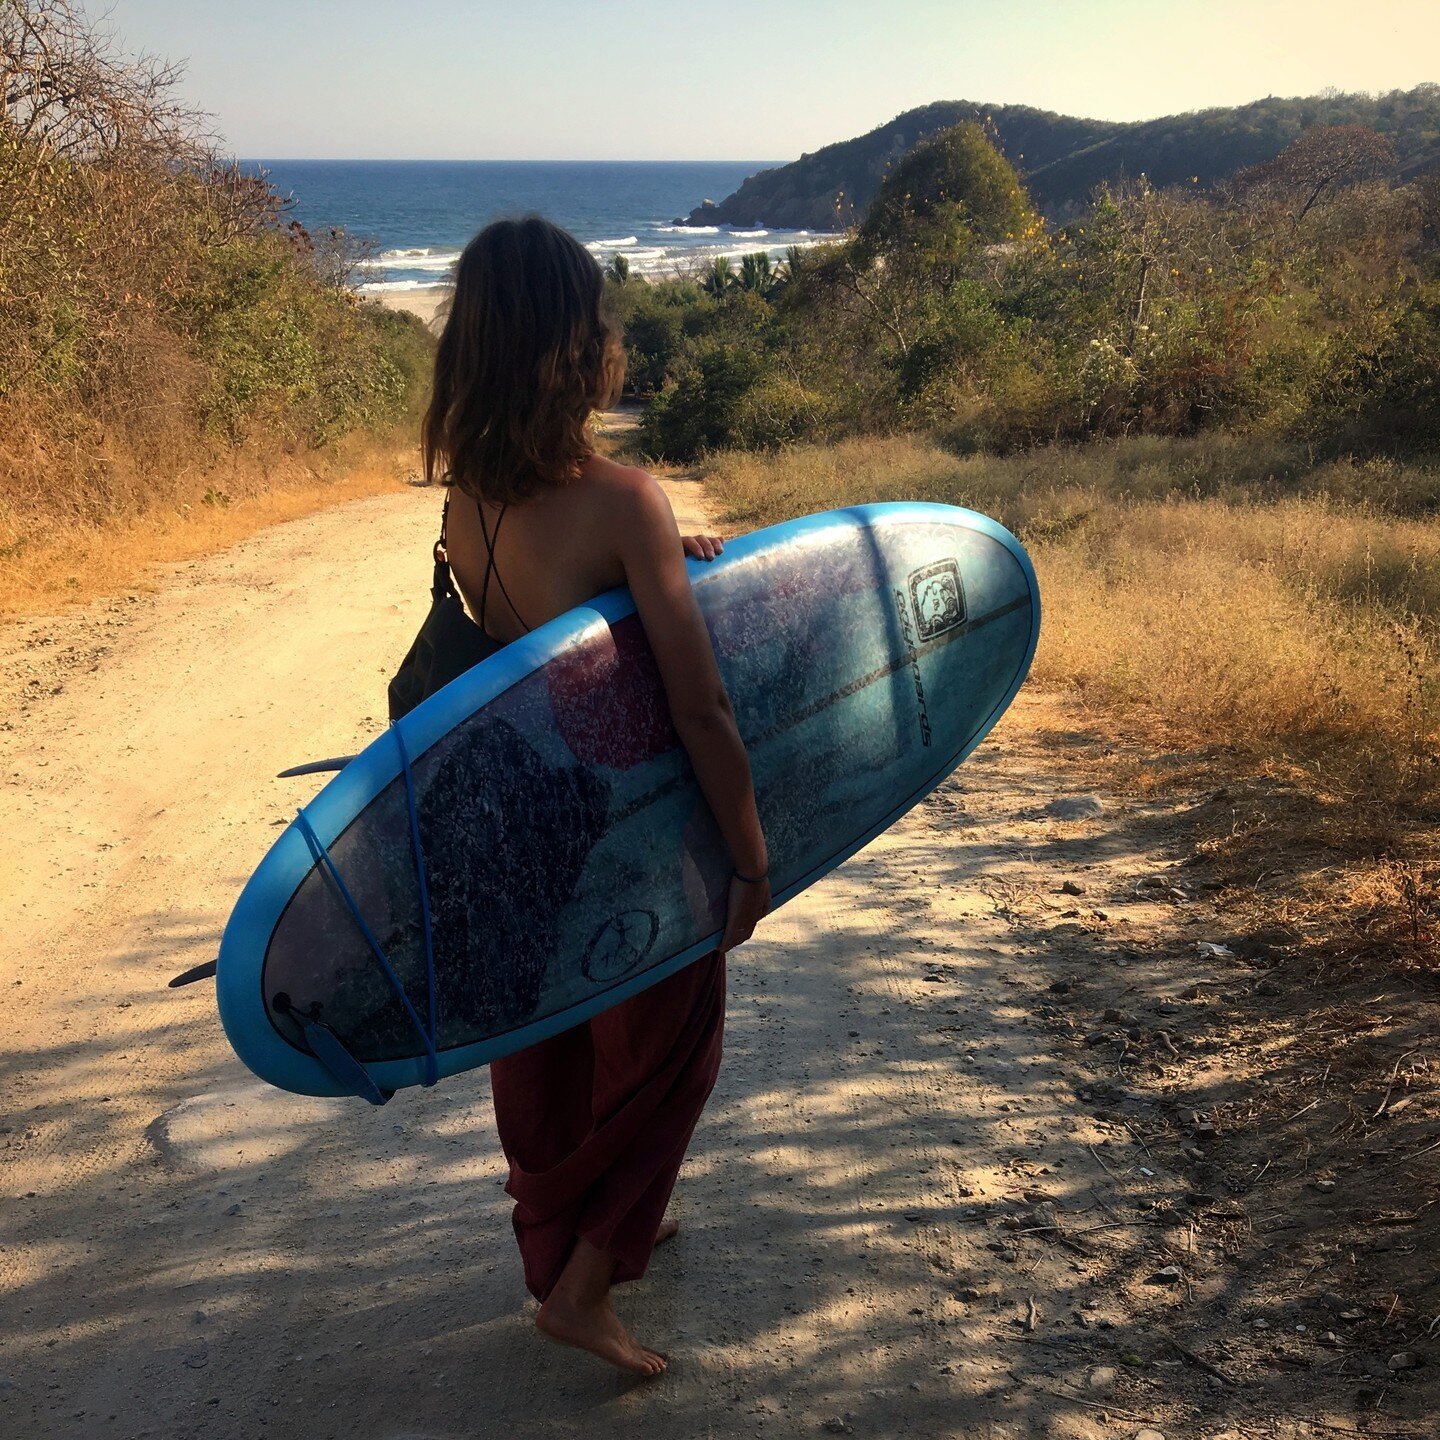 Waves + Surfboard = Paradise⁠
@wrglbrmft ⁠
@lenerosa ⁠
#H5O #Mexico #Odyboards #Oaxaca